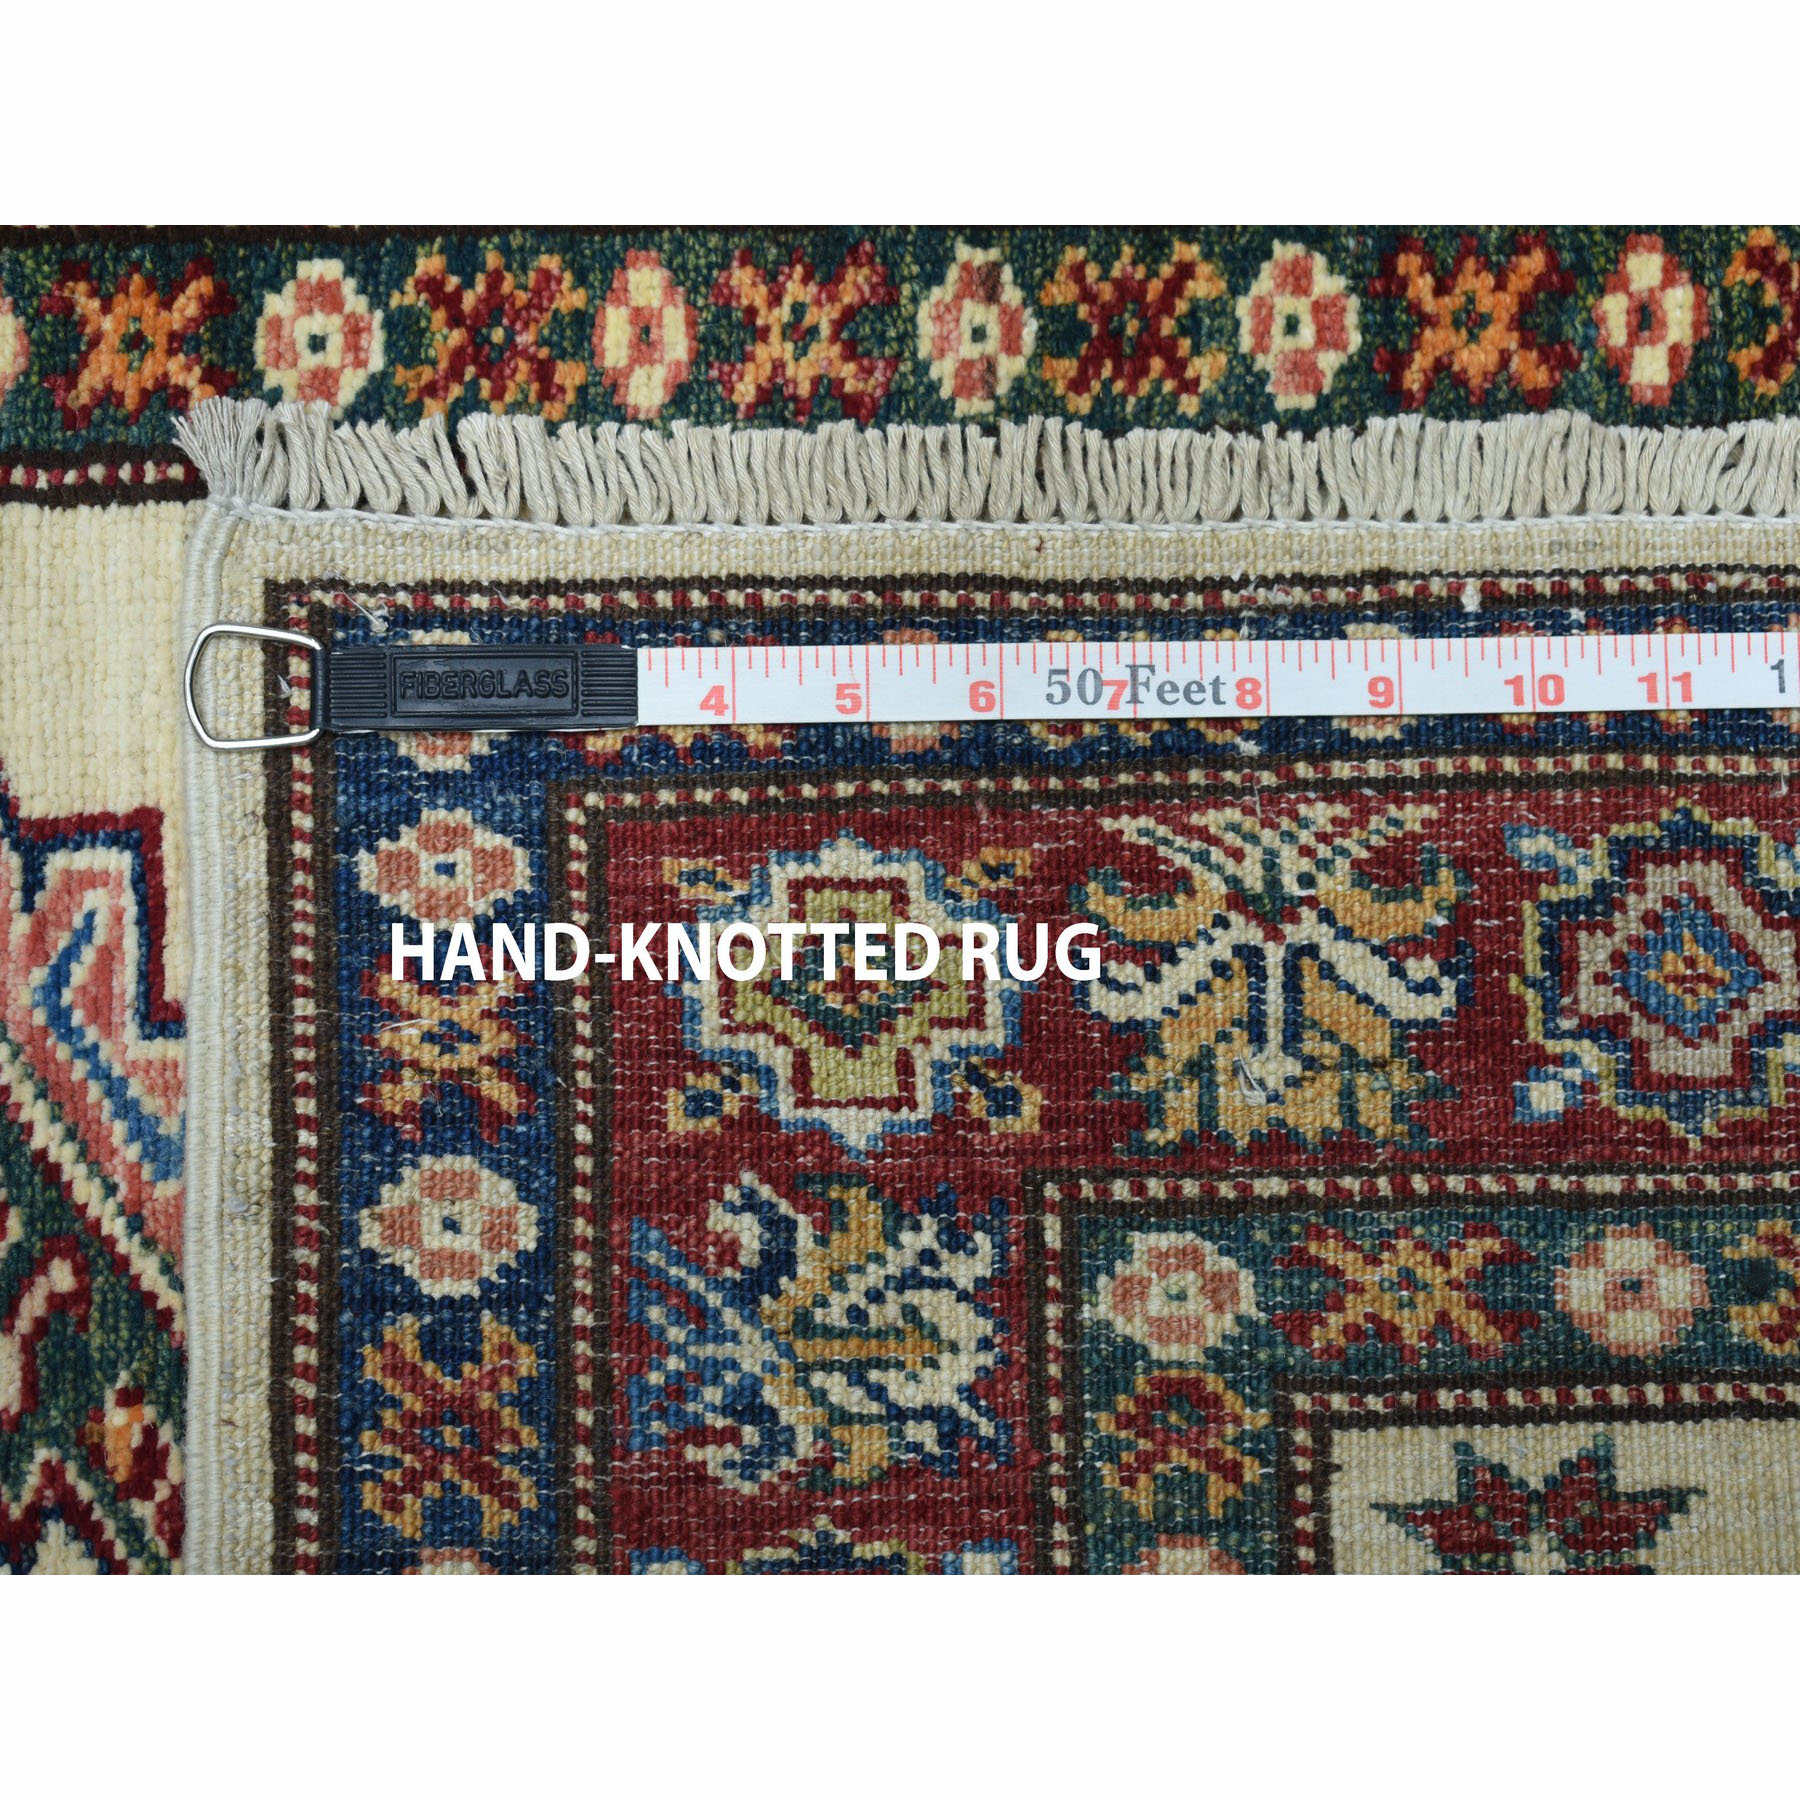 2'9"x19'1" Ivory Super Kazak Geometric Design Hand Woven XL Runner Oriental Rug 